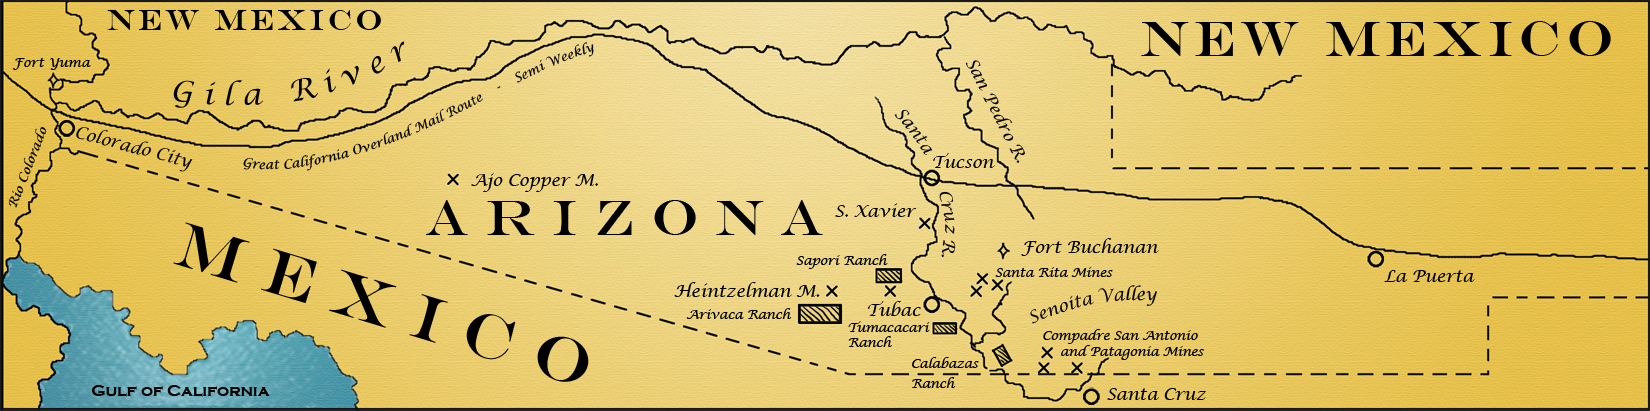 File:Map of Arizona